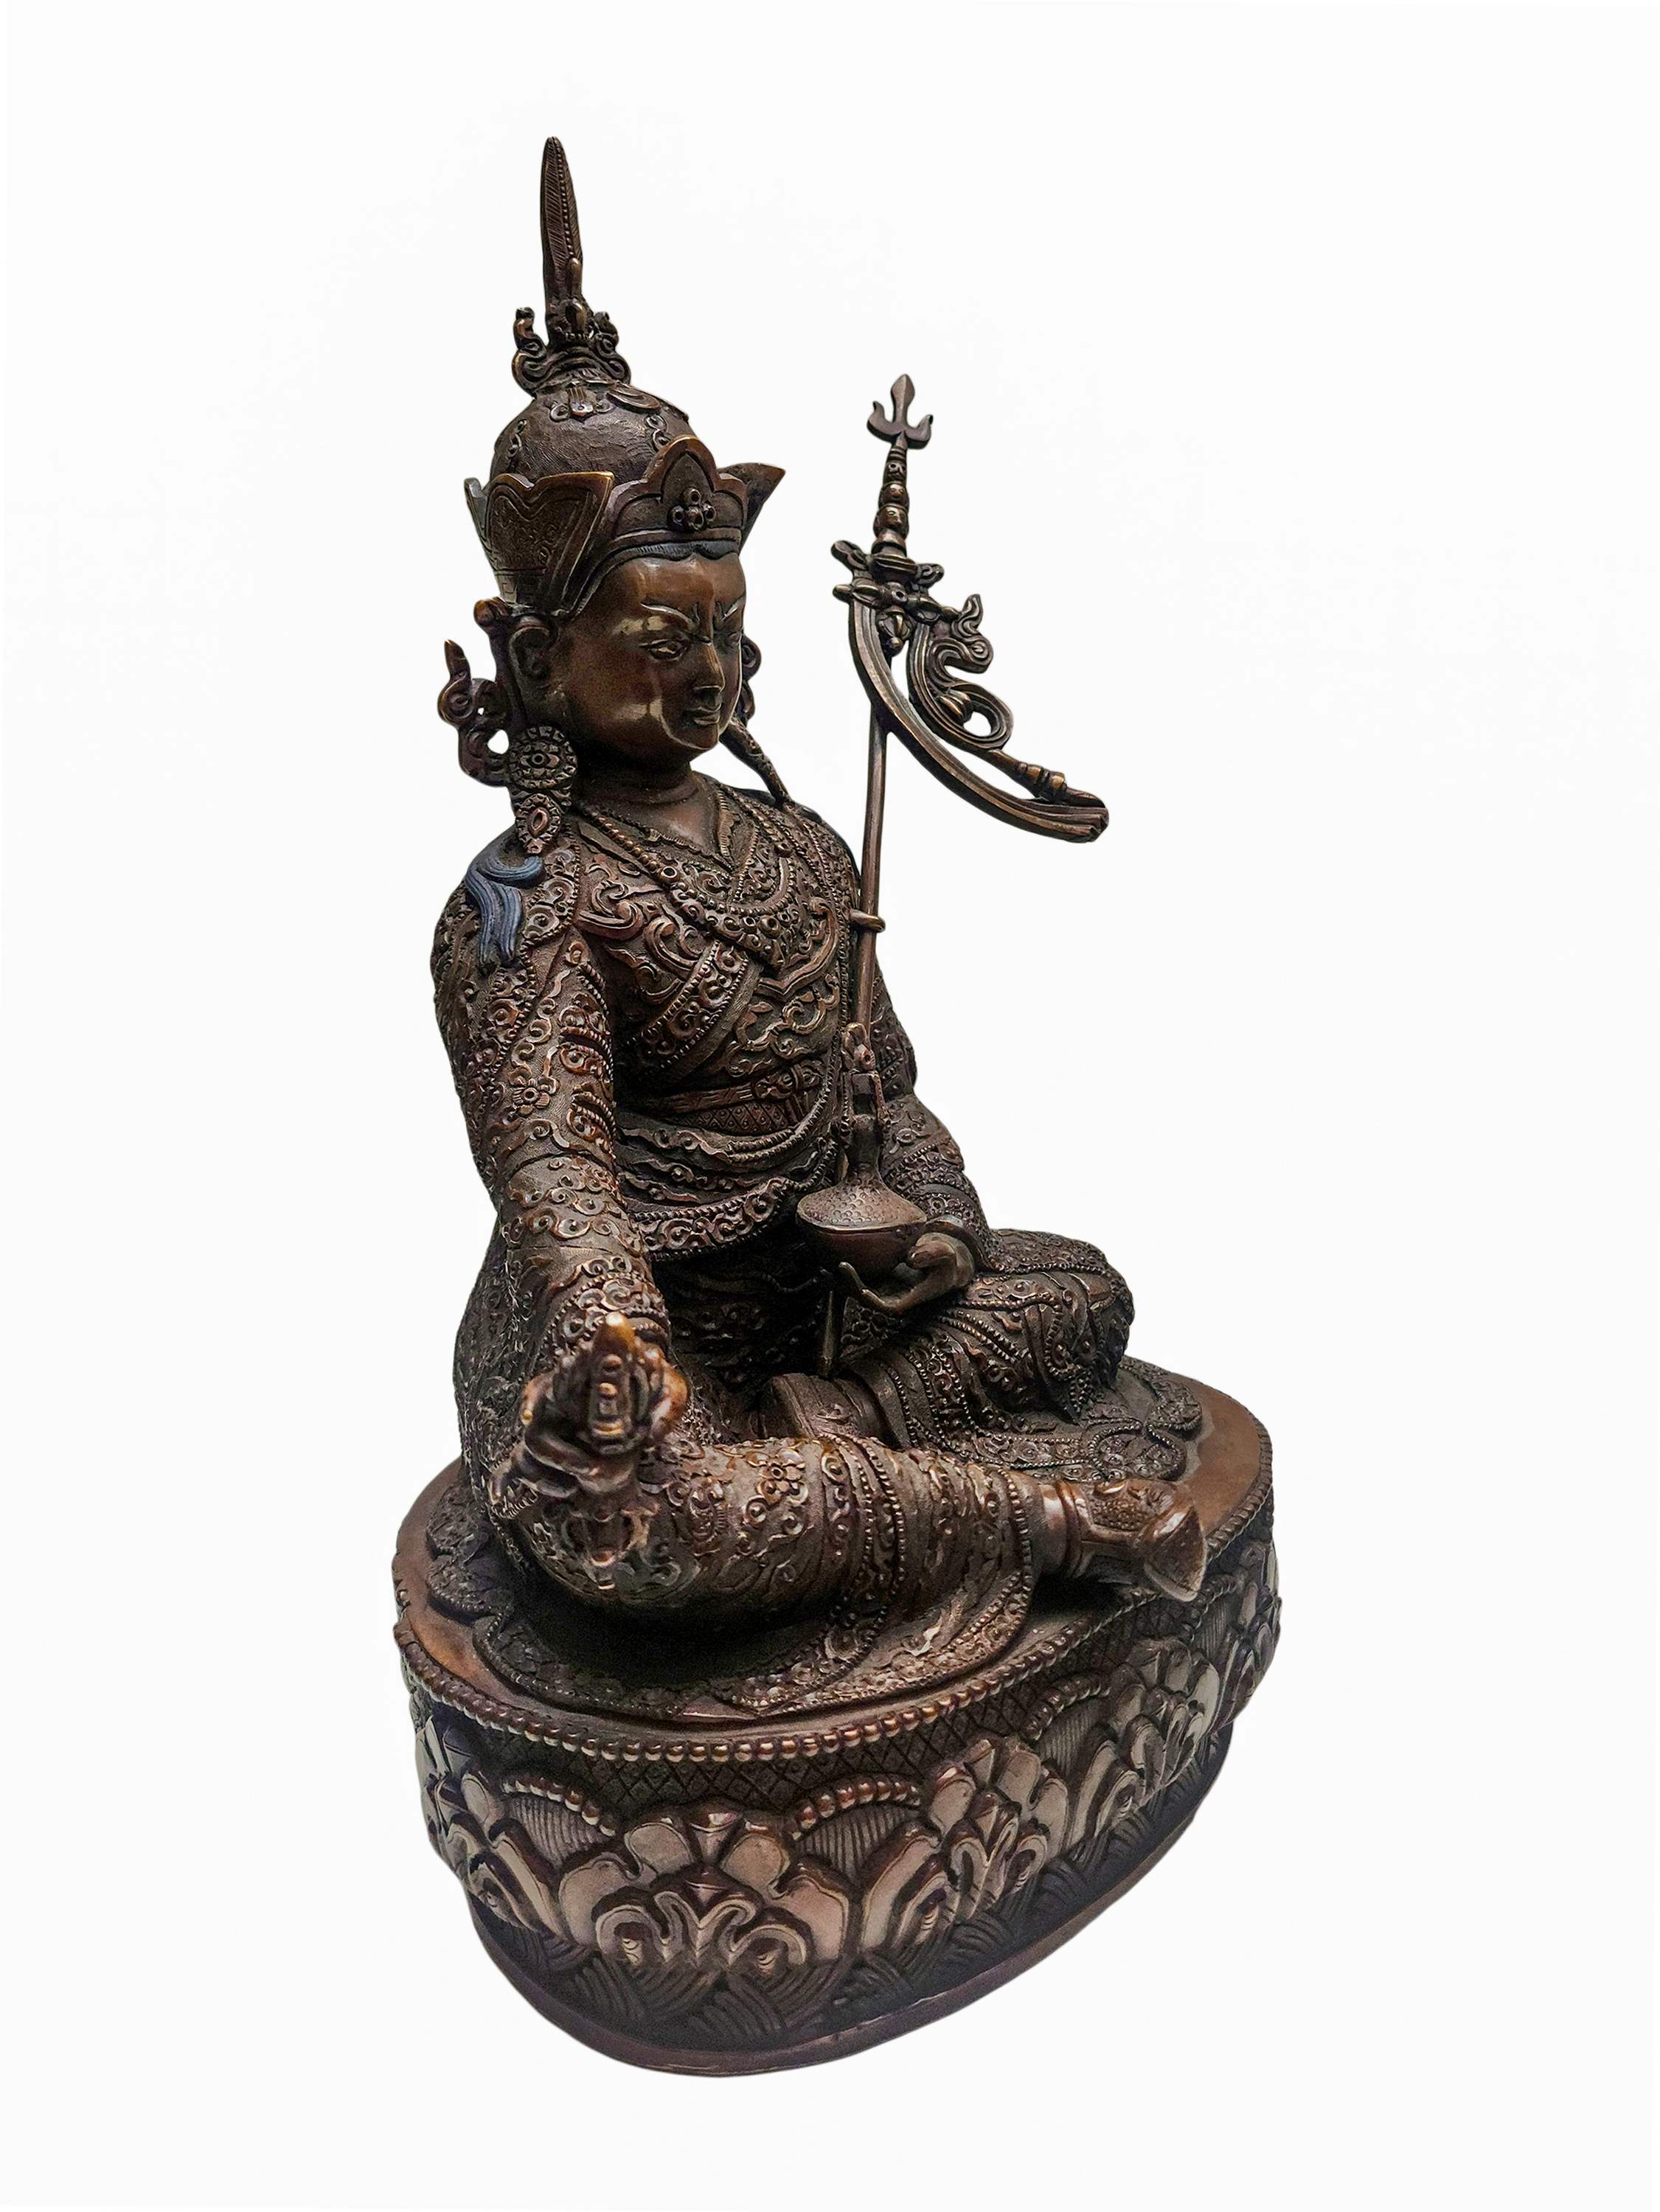 Padmasambhava - Guru Rinpoche, Buddhist Handmade Statue, chocolate Oxidized, With Detailed Deep Carving